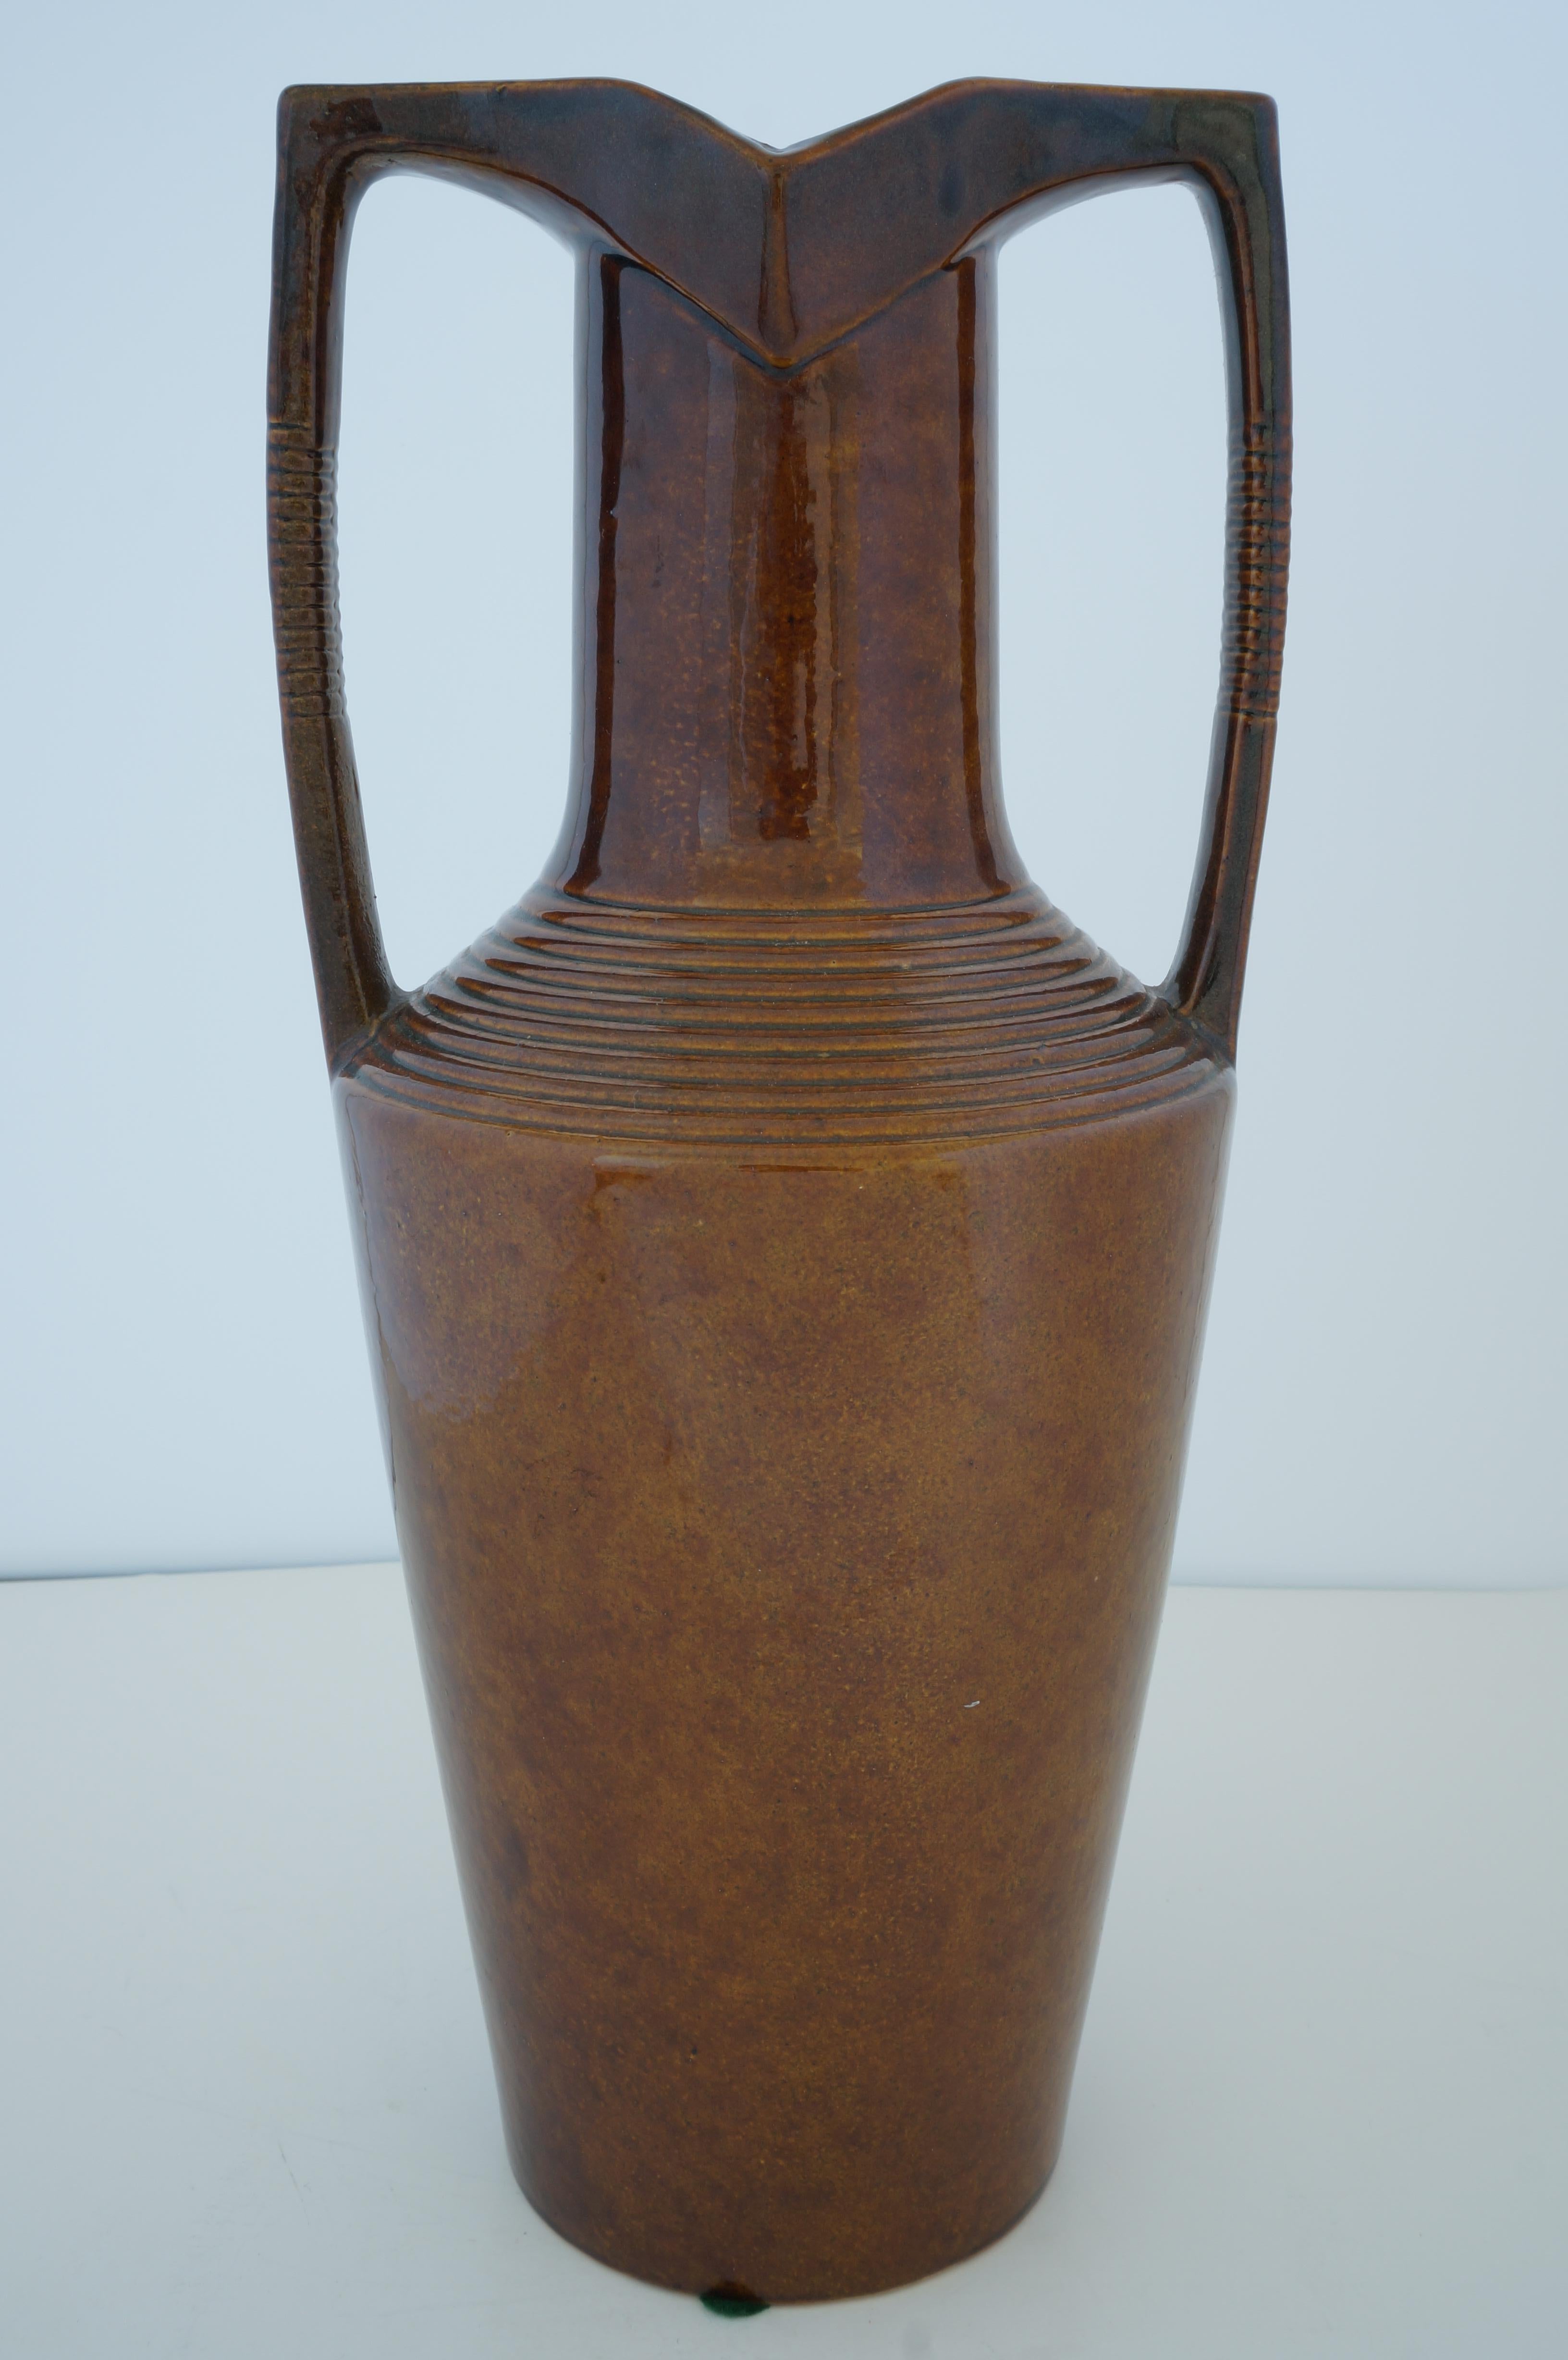 Vintage Art Deco 1920s Egyptian revival handled jug urn vase glazed ceramic from a Palm Beach estate.